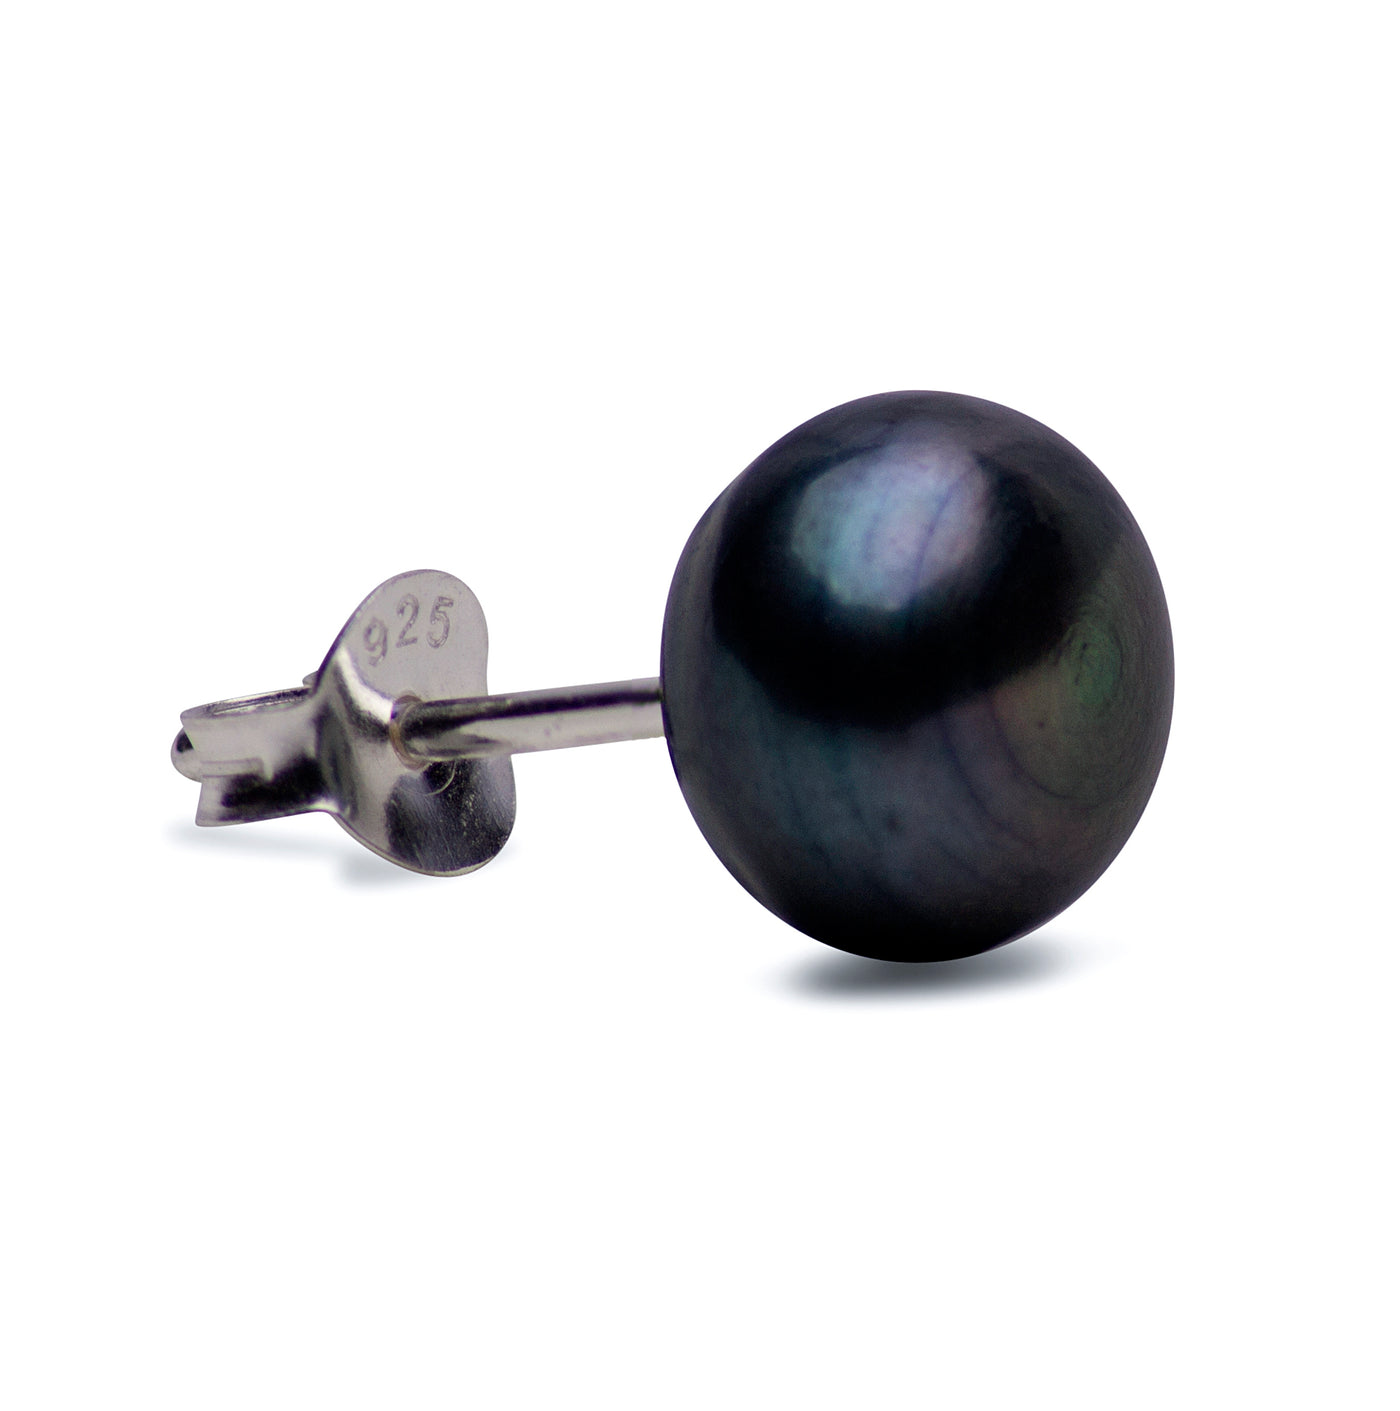 8 mm Black Cultured Pearl Earrings | SilverAndGold